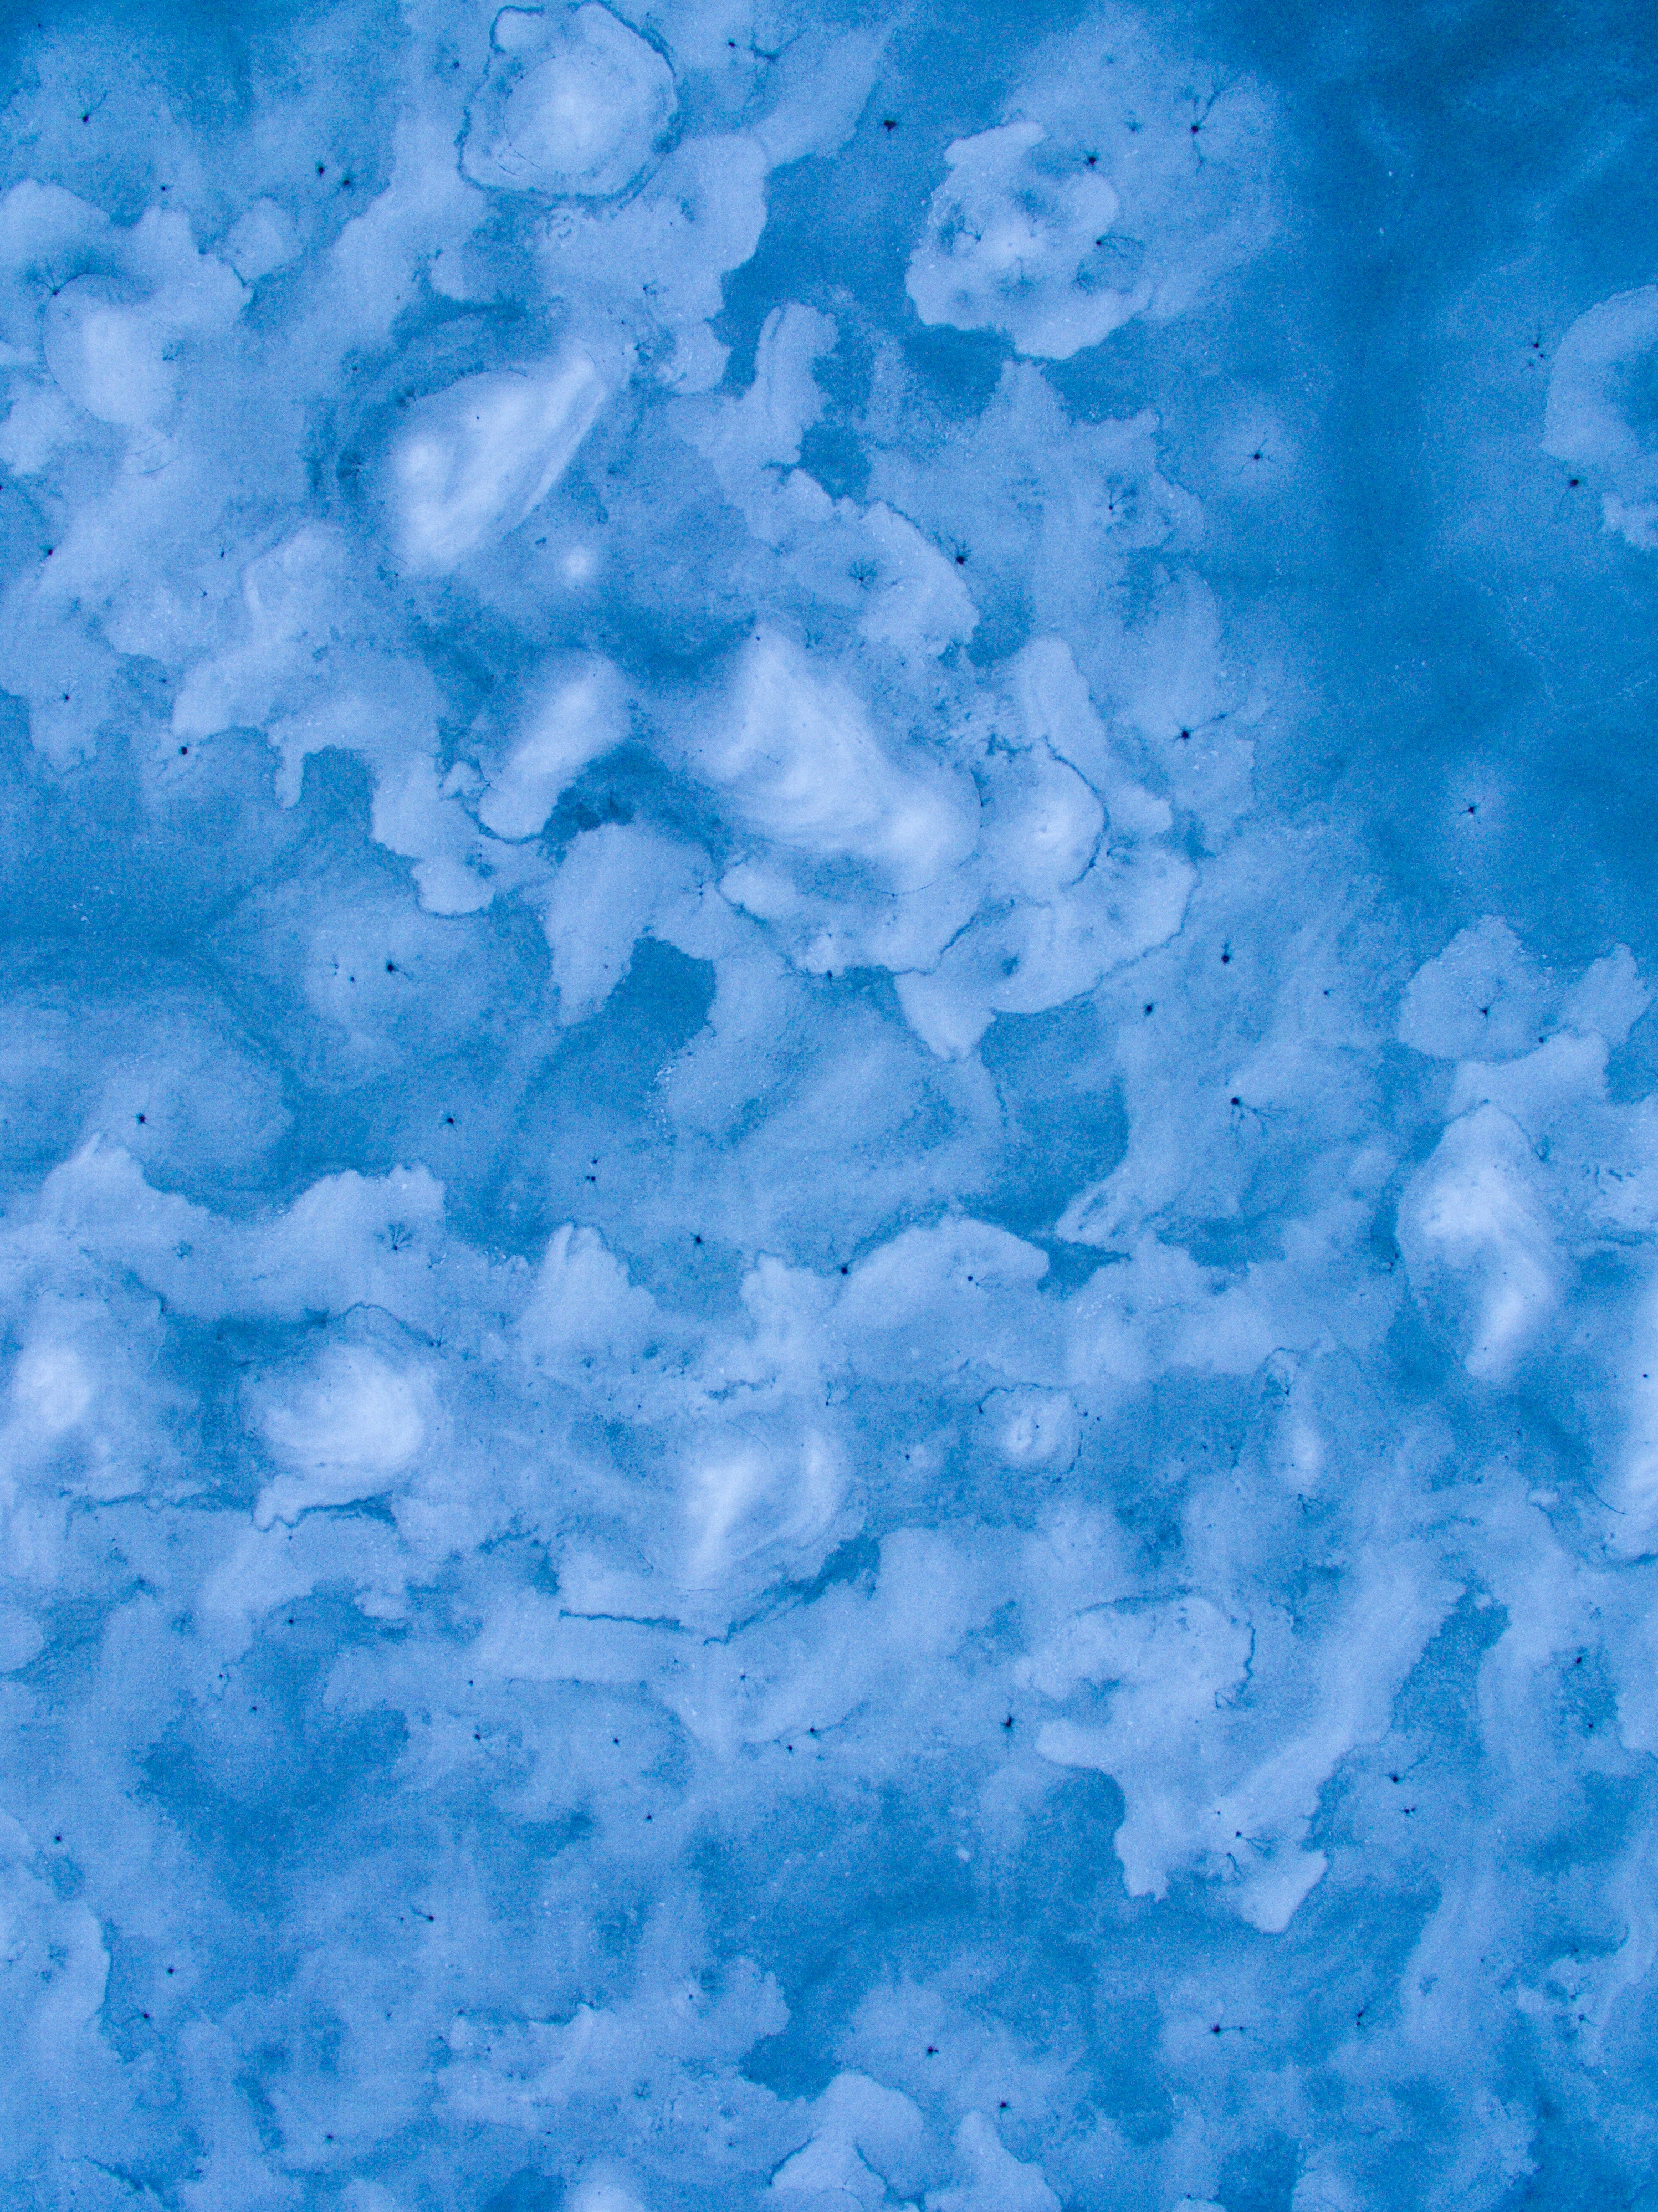 Скачать обои бесплатно Снег, Мороз, Лед, Узор, Пятна, Текстура, Текстуры картинка на рабочий стол ПК